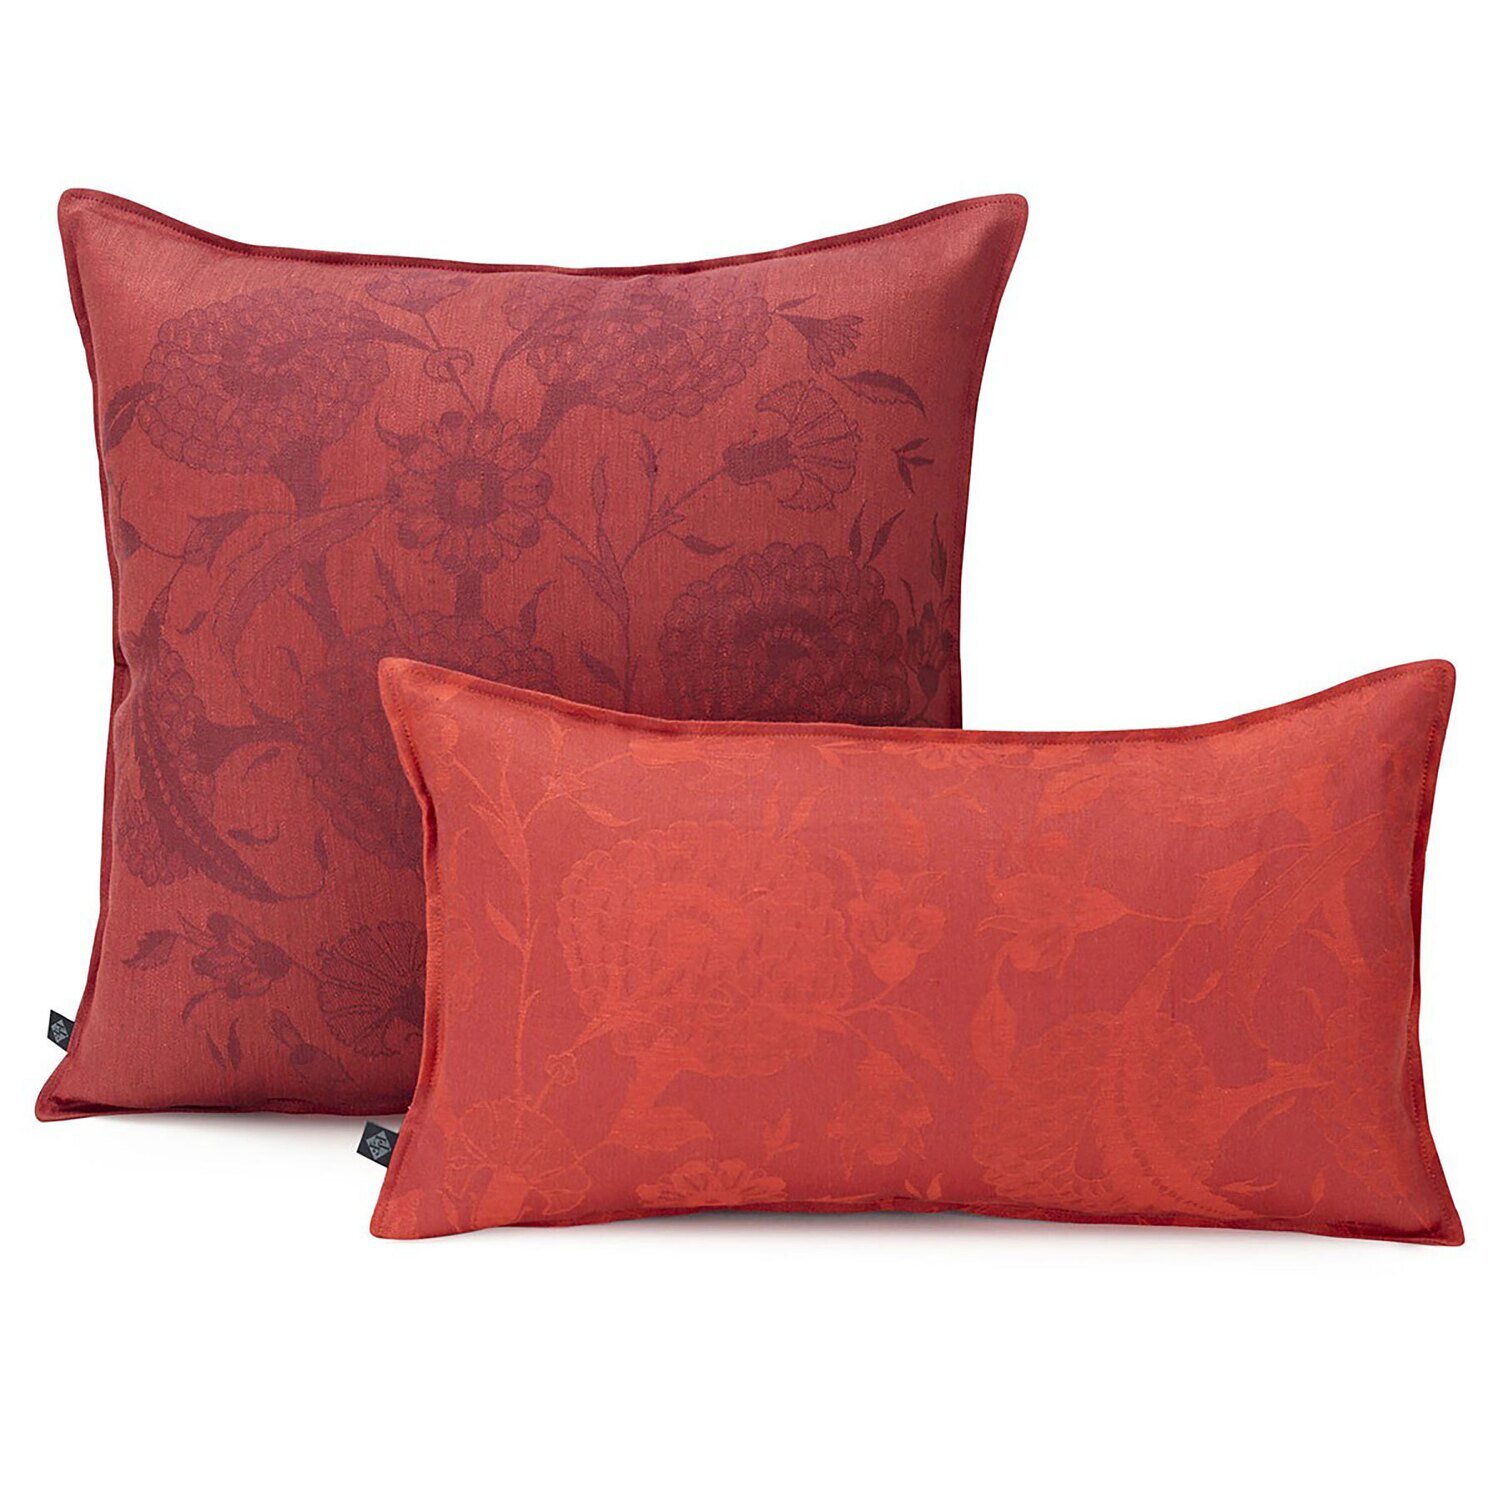 Le Jacquard Cushion Cover Ottomane Burgundy 50 x 30 100% Linen 26699